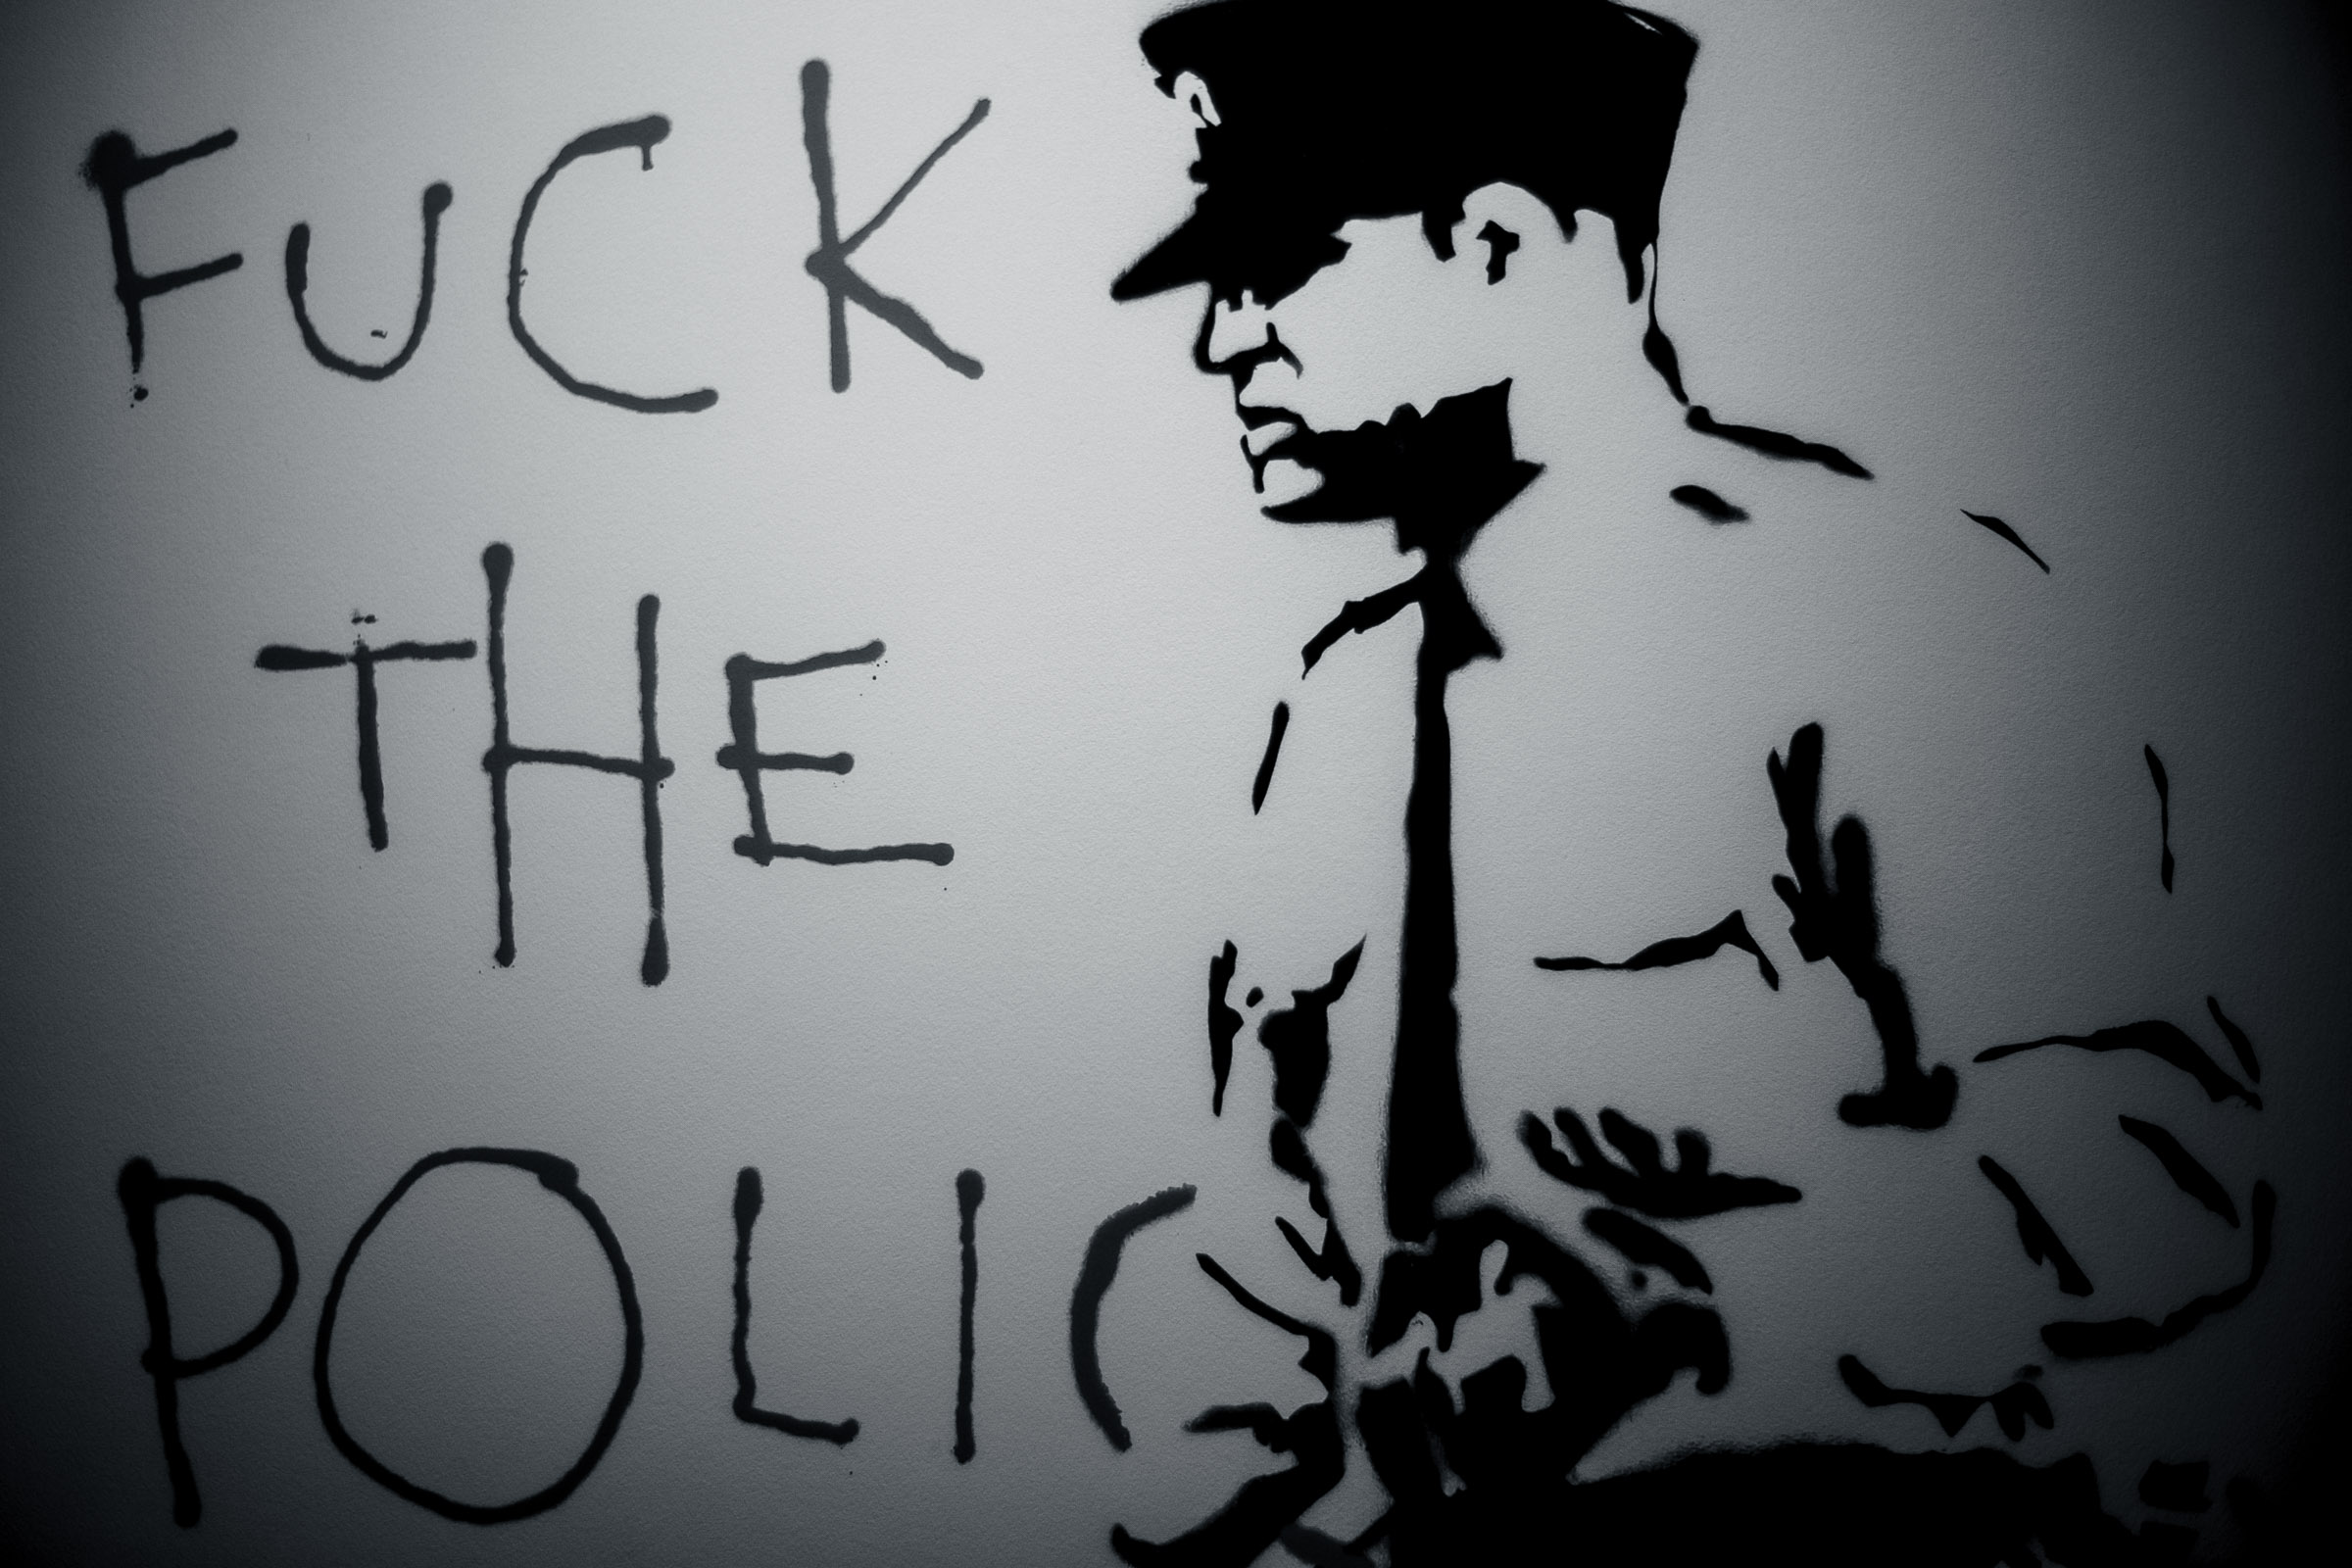 Banksy: Fuck the police